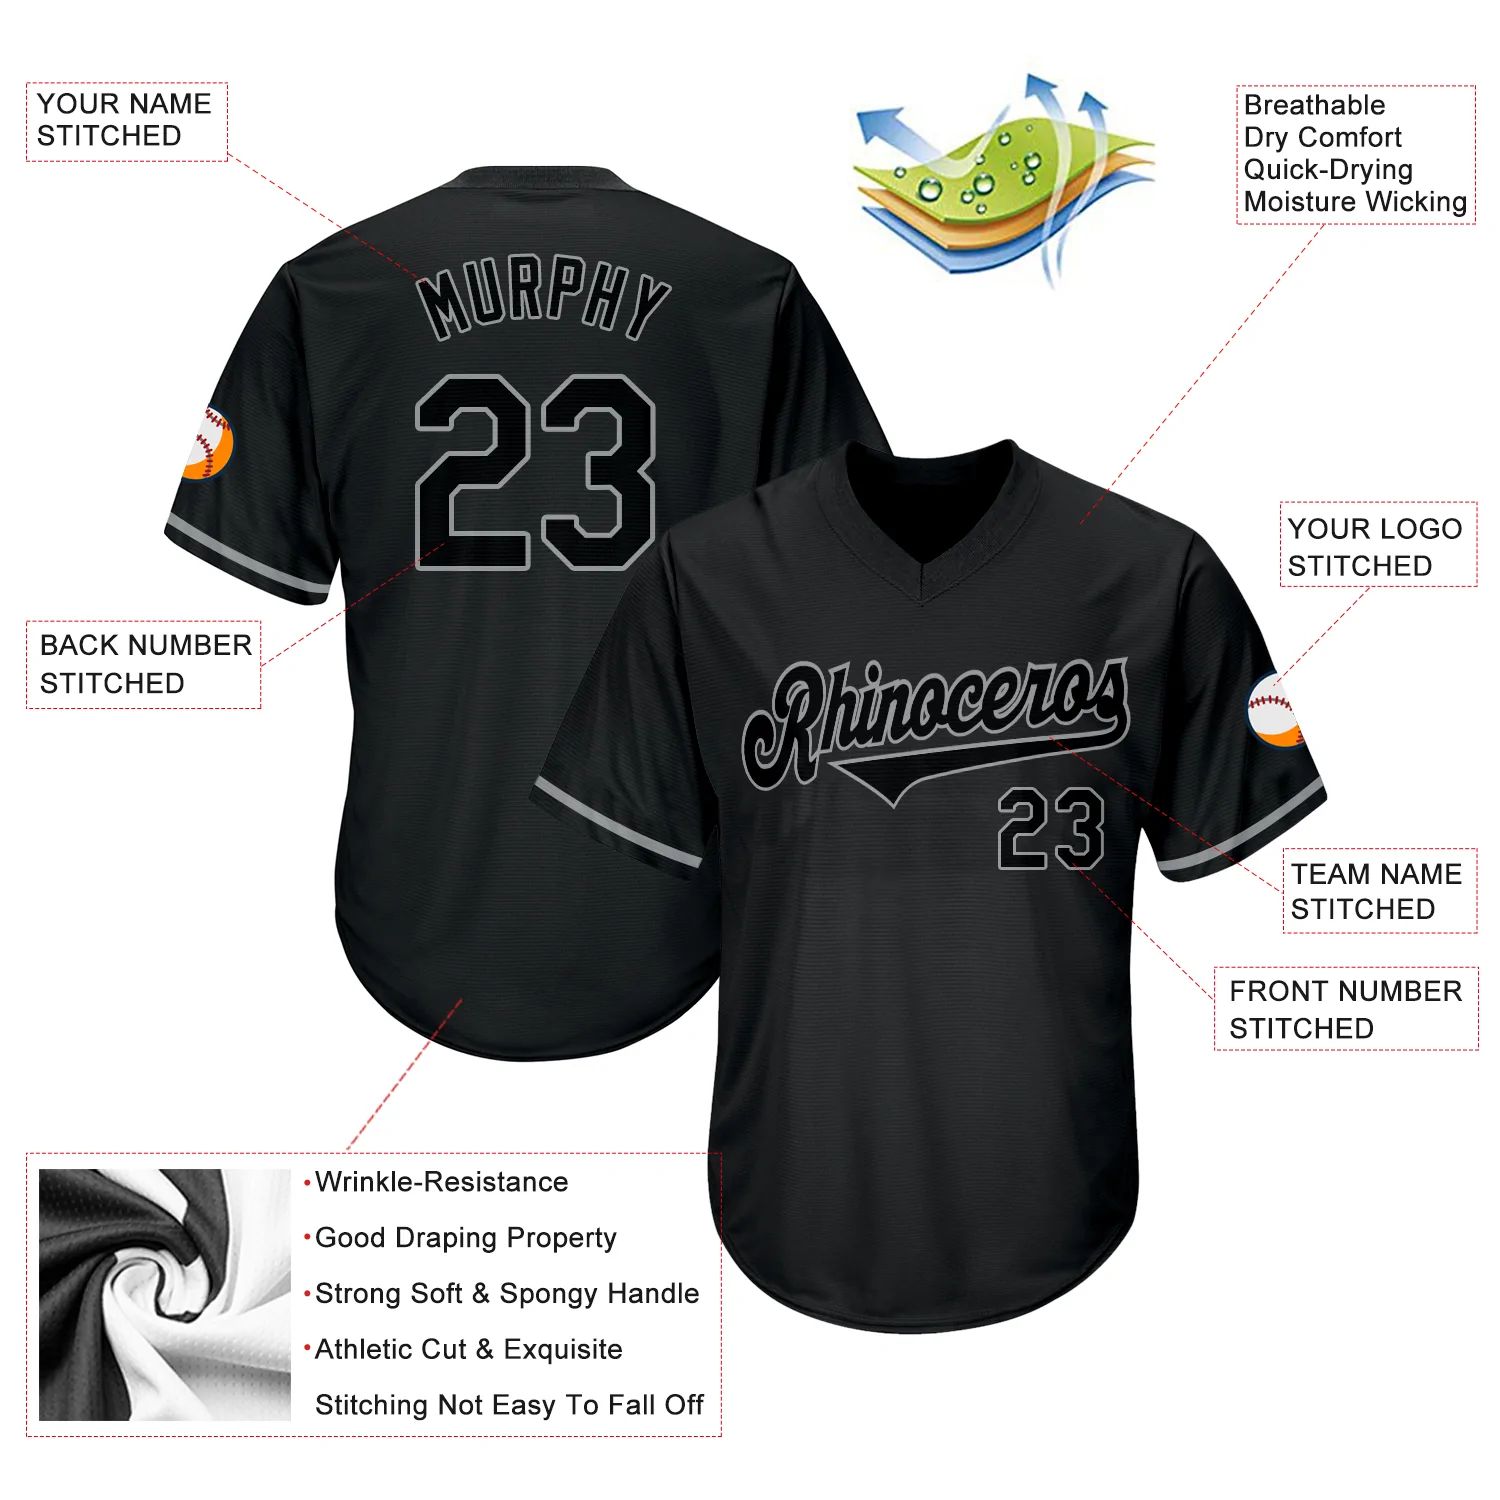 build-gray-black-baseball-black-jersey-authentic-throwback-eblack00976-online-4.jpg